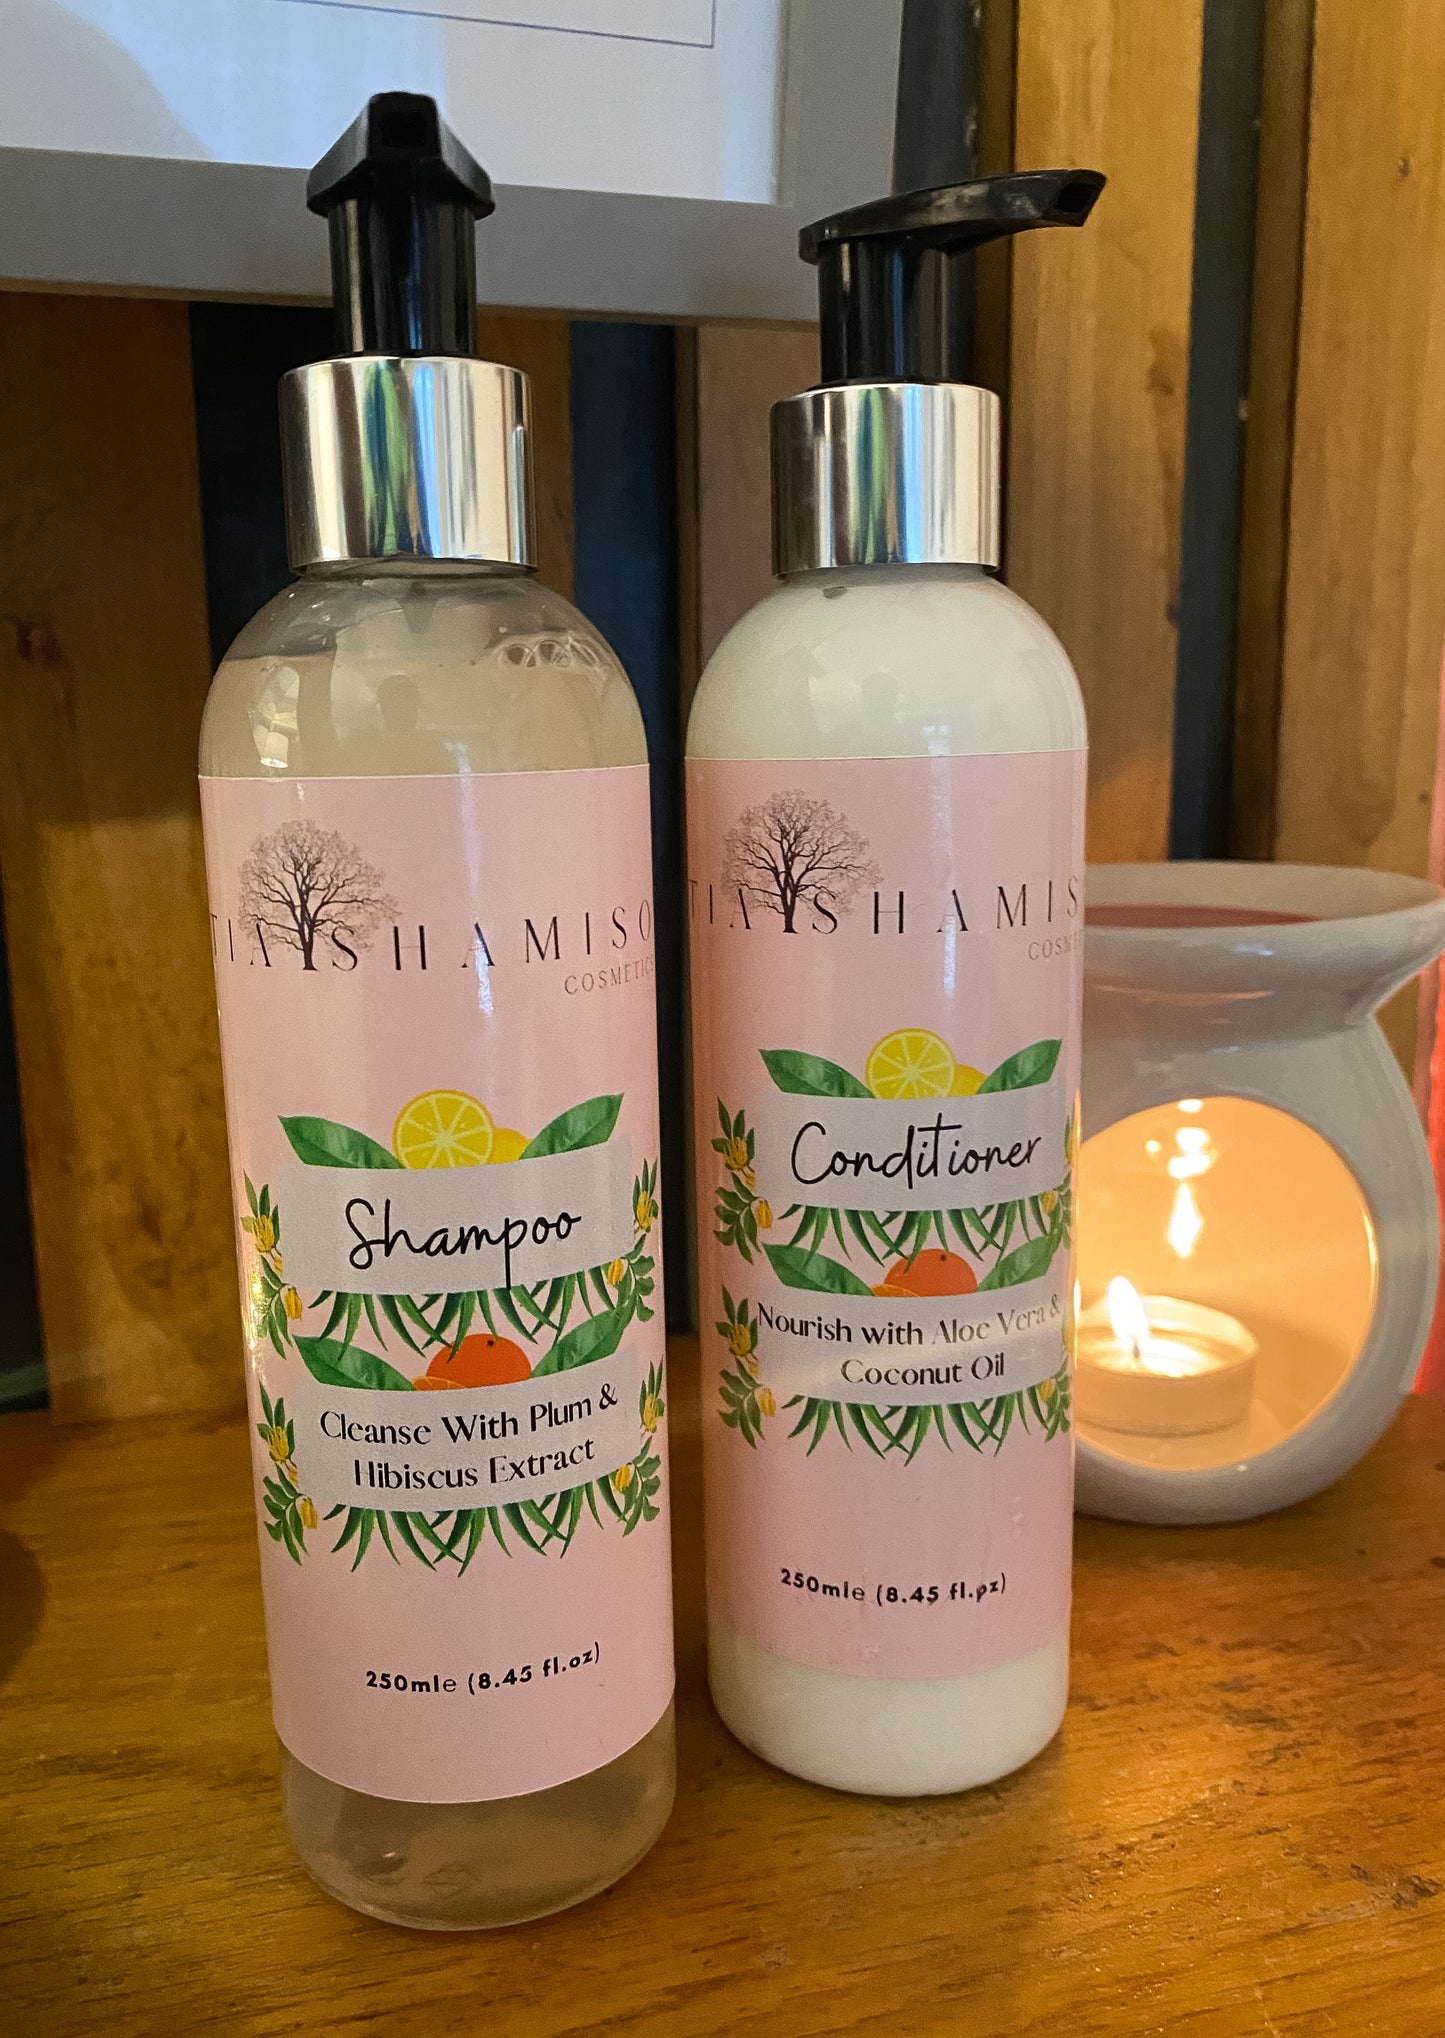 Cleansing Shampoo  x Nourishing Conditioner - Orange and Bergamot